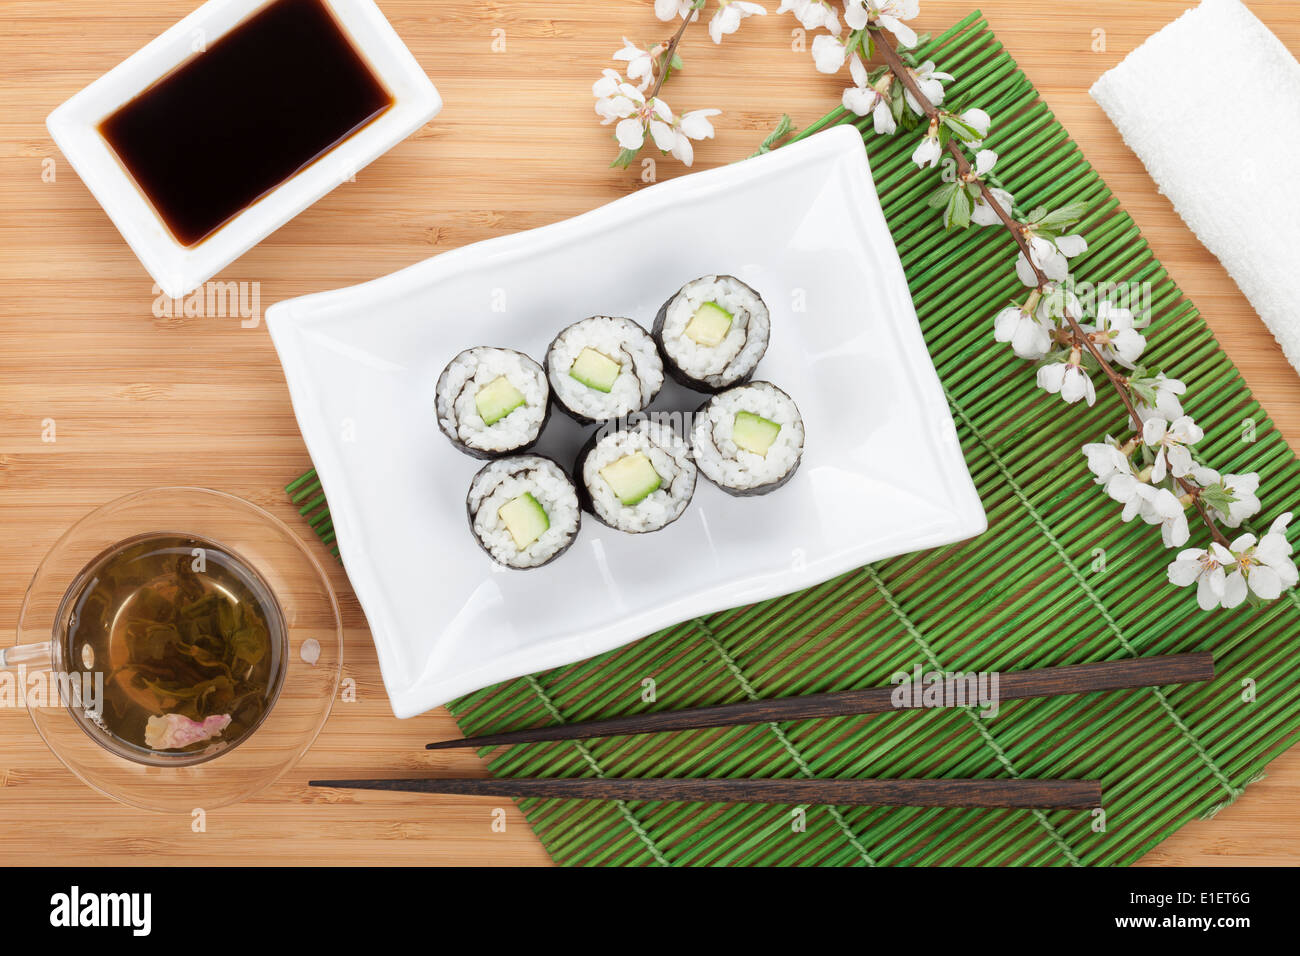 https://c8.alamy.com/comp/E1ET6G/japanese-roll-with-cucumber-and-fresh-sakura-branch-over-bamboo-table-E1ET6G.jpg